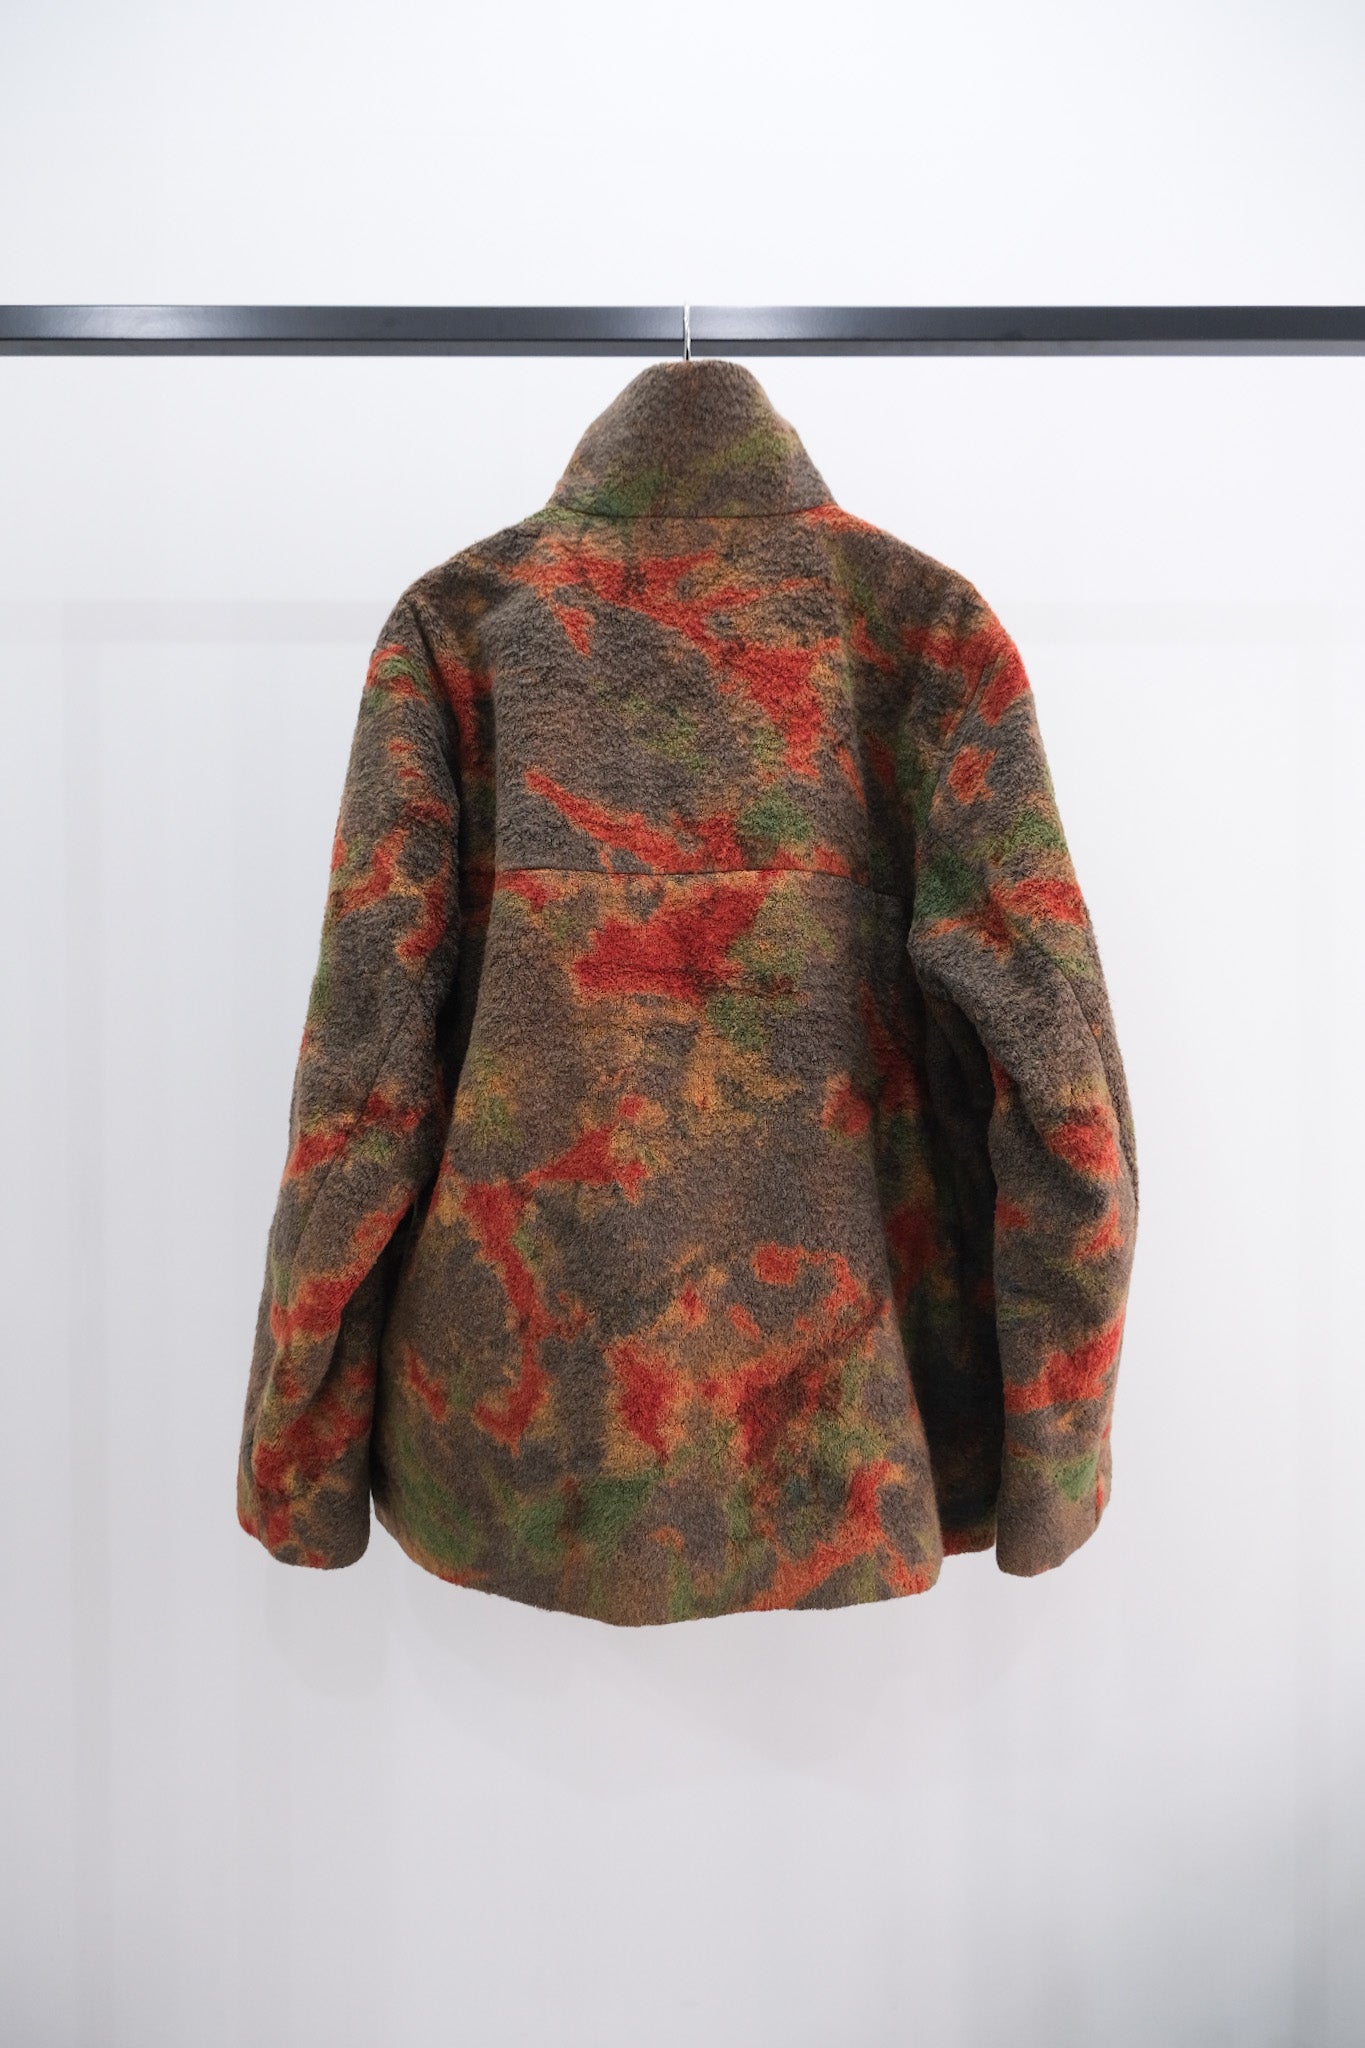 Yaksheep pile hakomura camouflage zip jacket